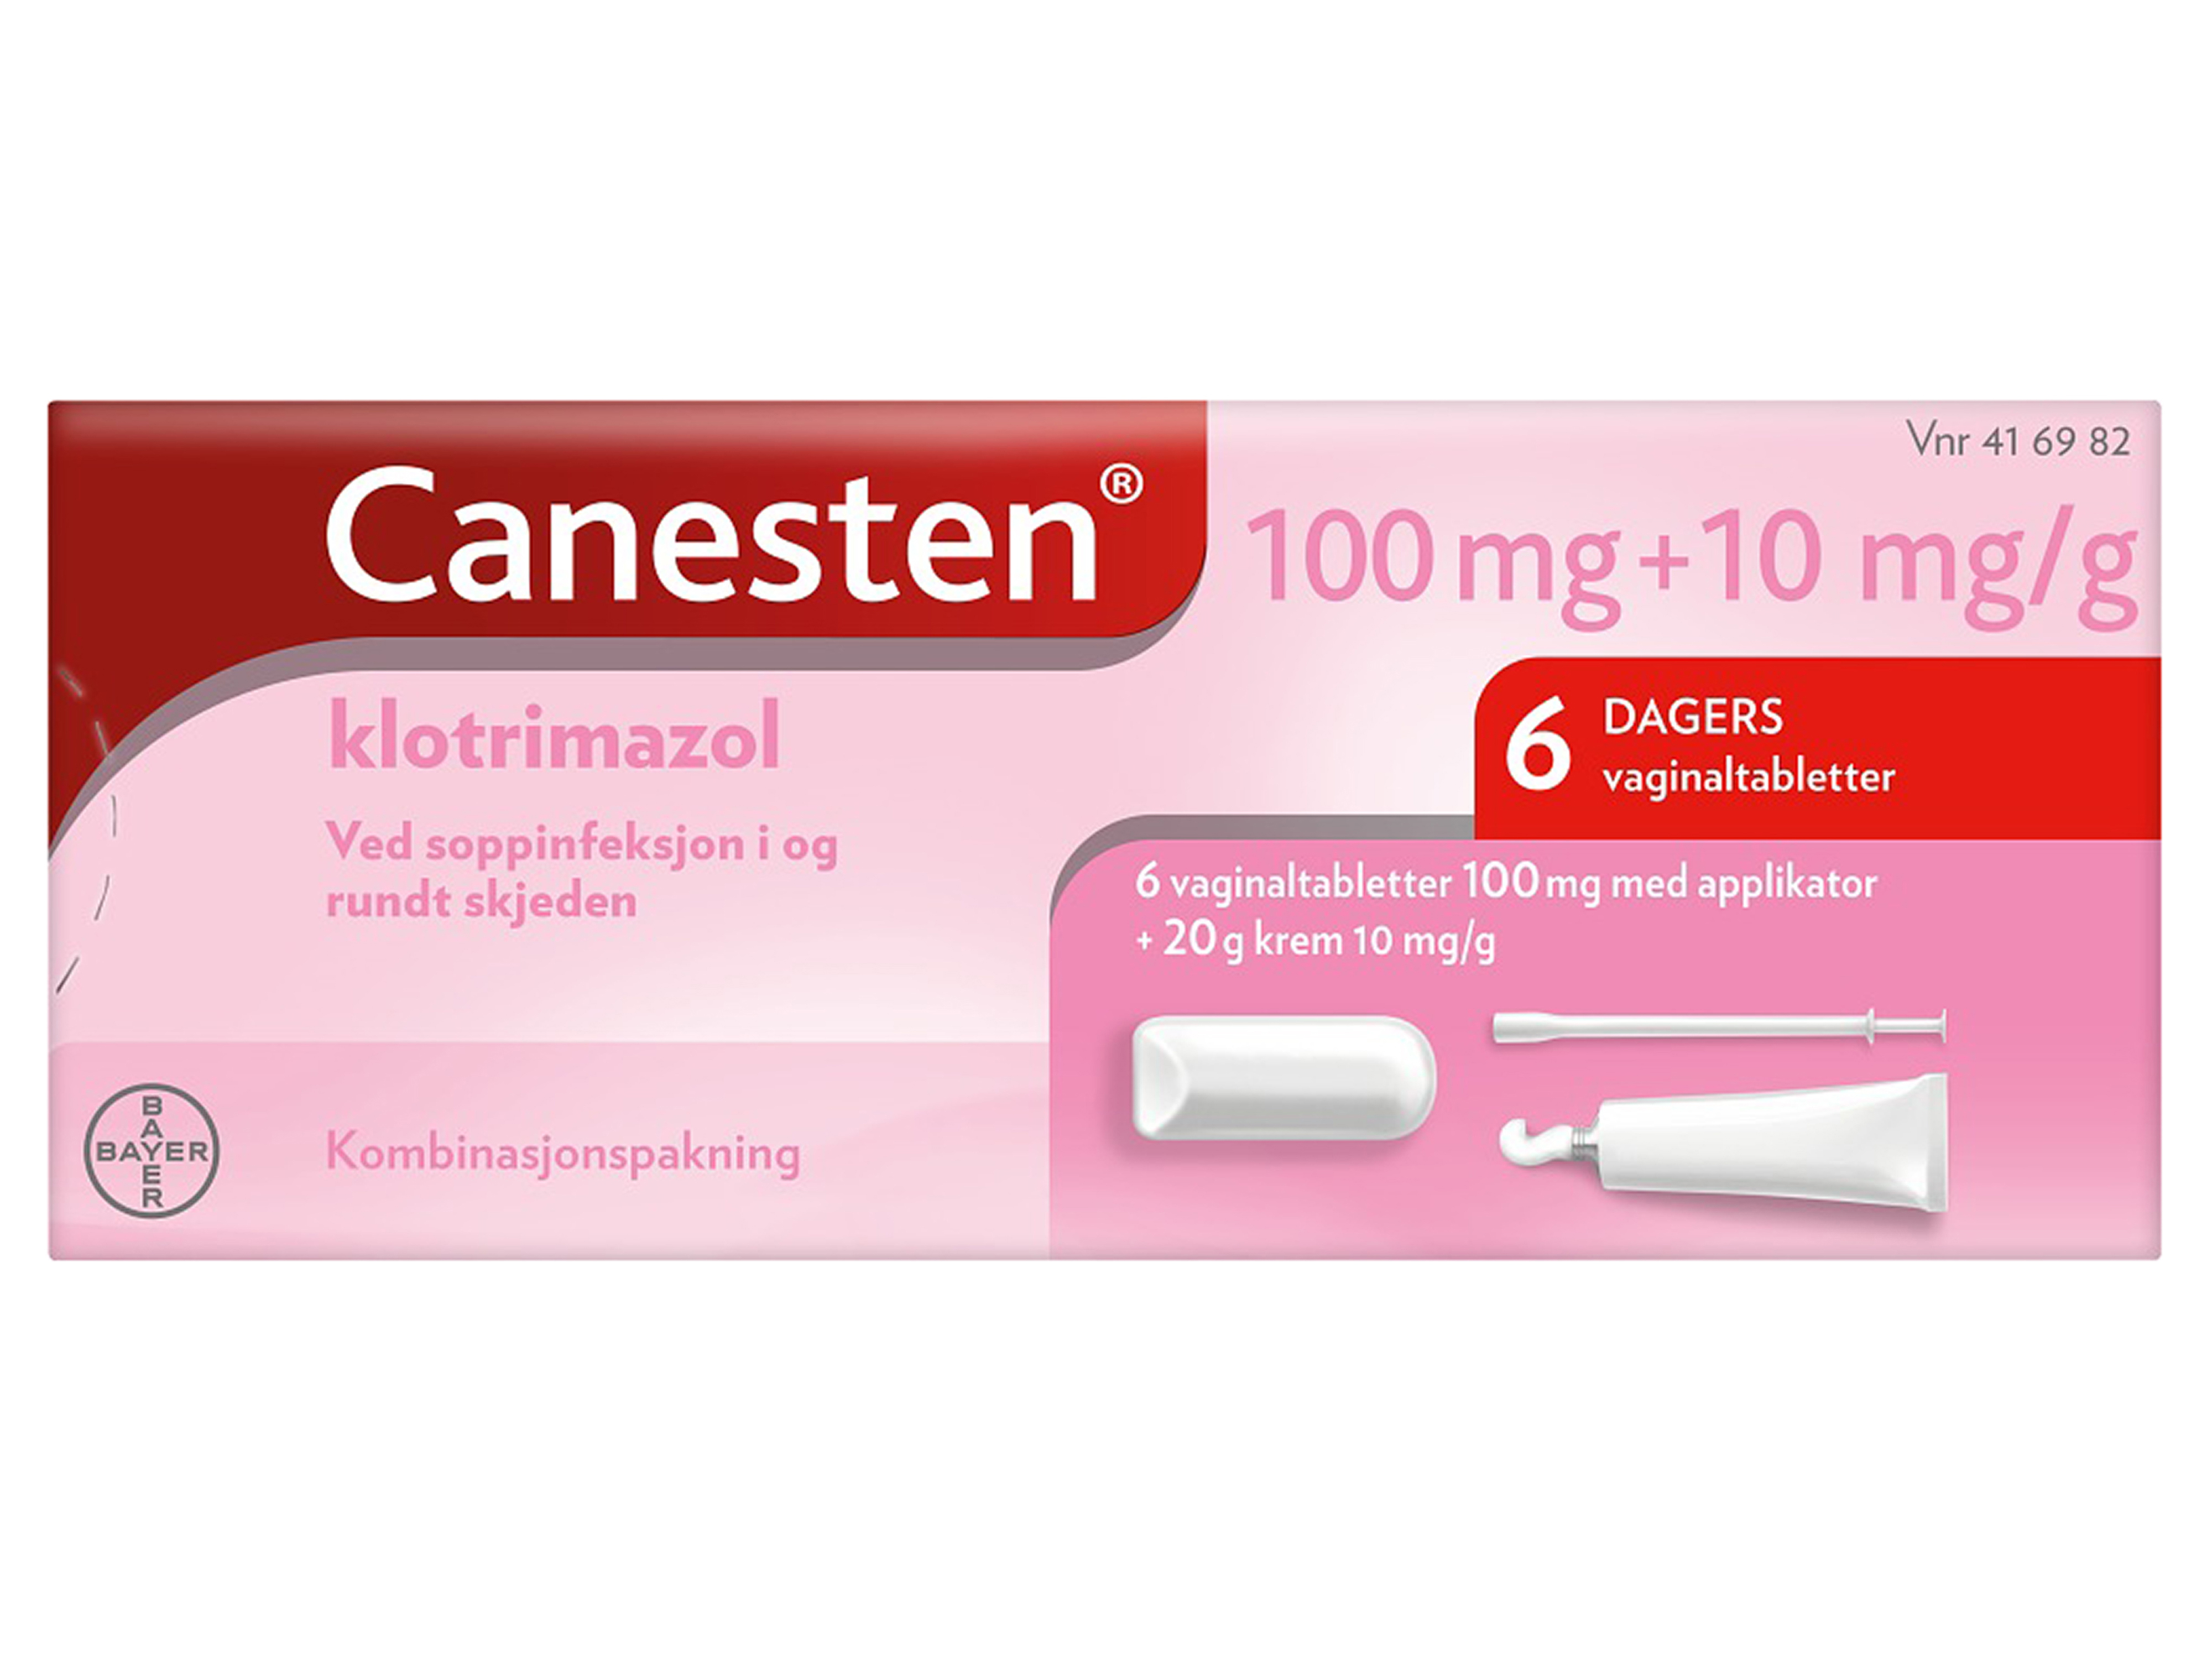 Canesten 100 mg vaginaltabletter + 10 mg/g krem, 6 stk. + 20 g